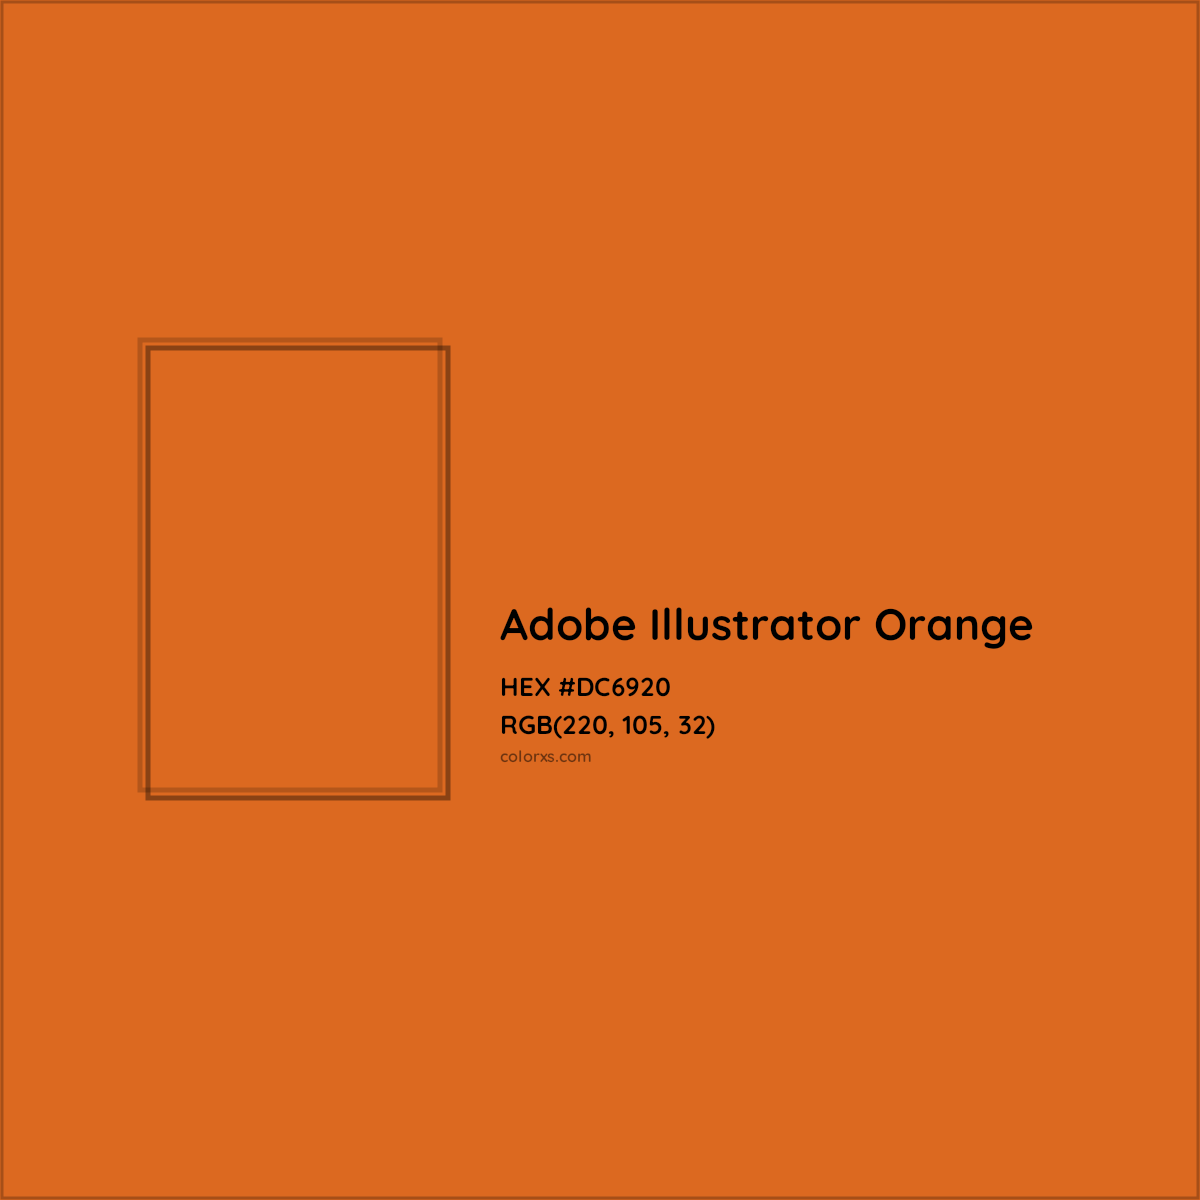 HEX #DC6920 Adobe Illustrator Orange Other Brand - Color Code